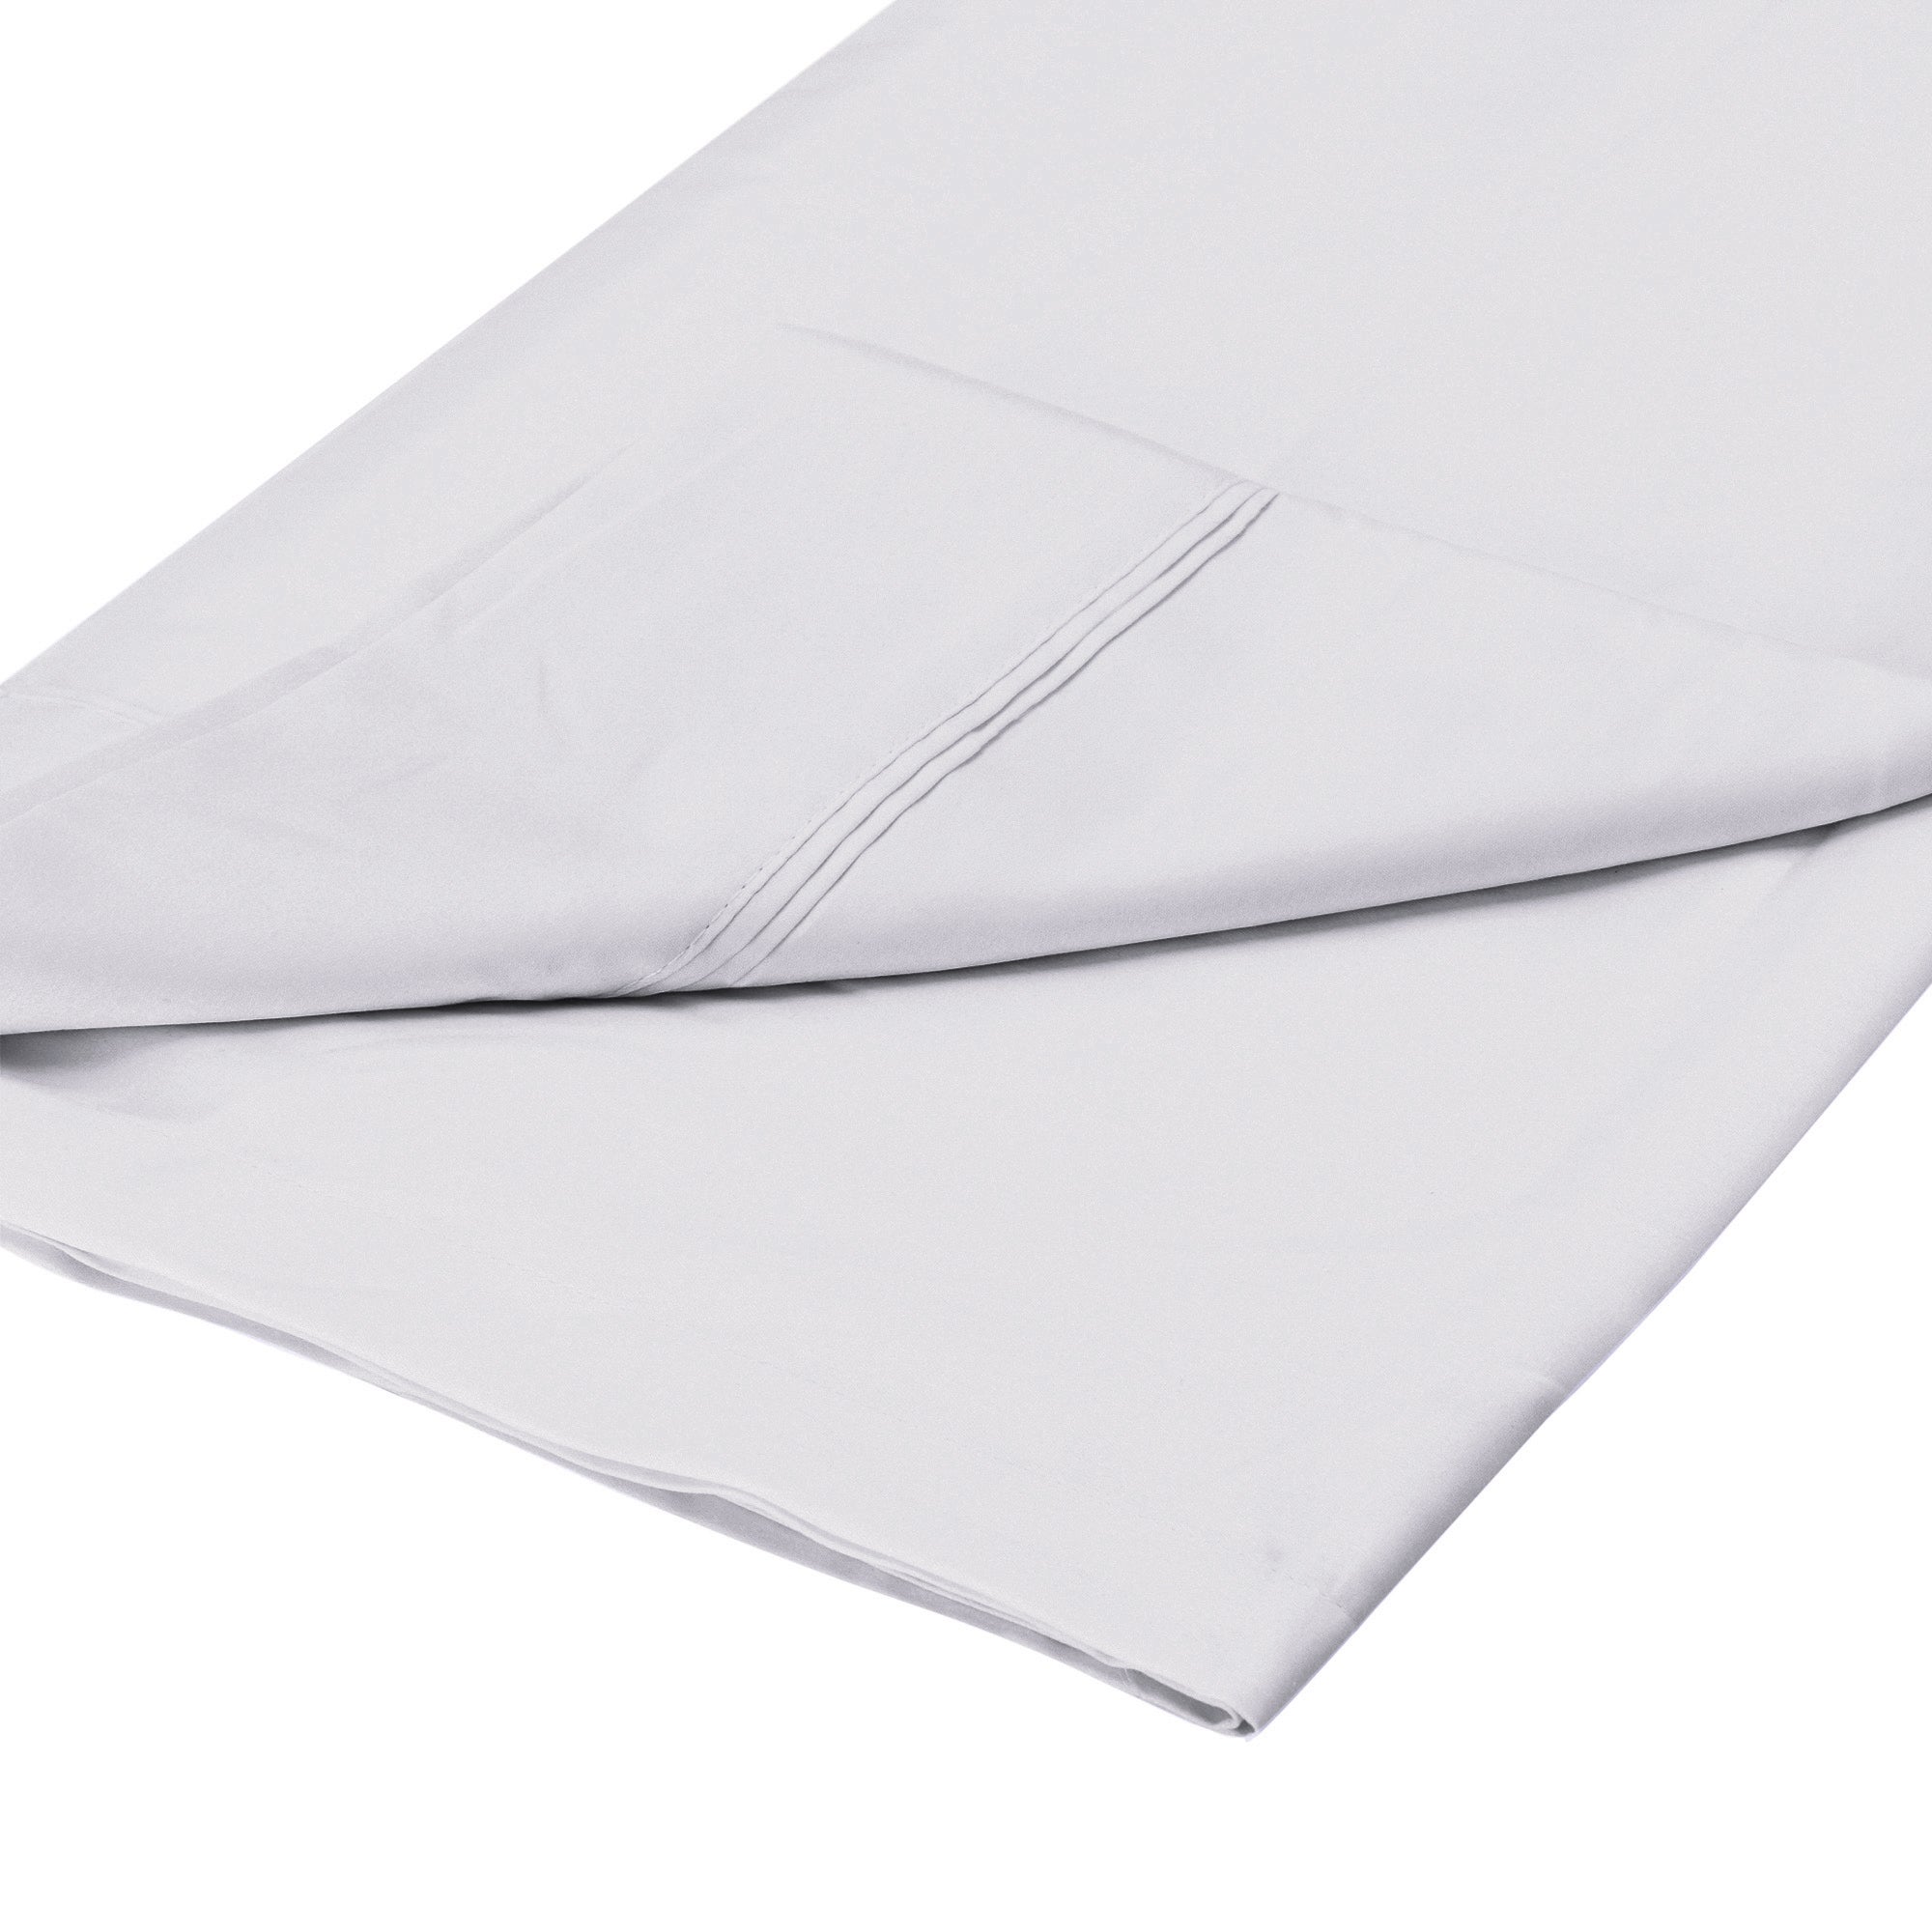 Dorma 500 Thread Count 100% Cotton Sateen Plain Flat Sheet